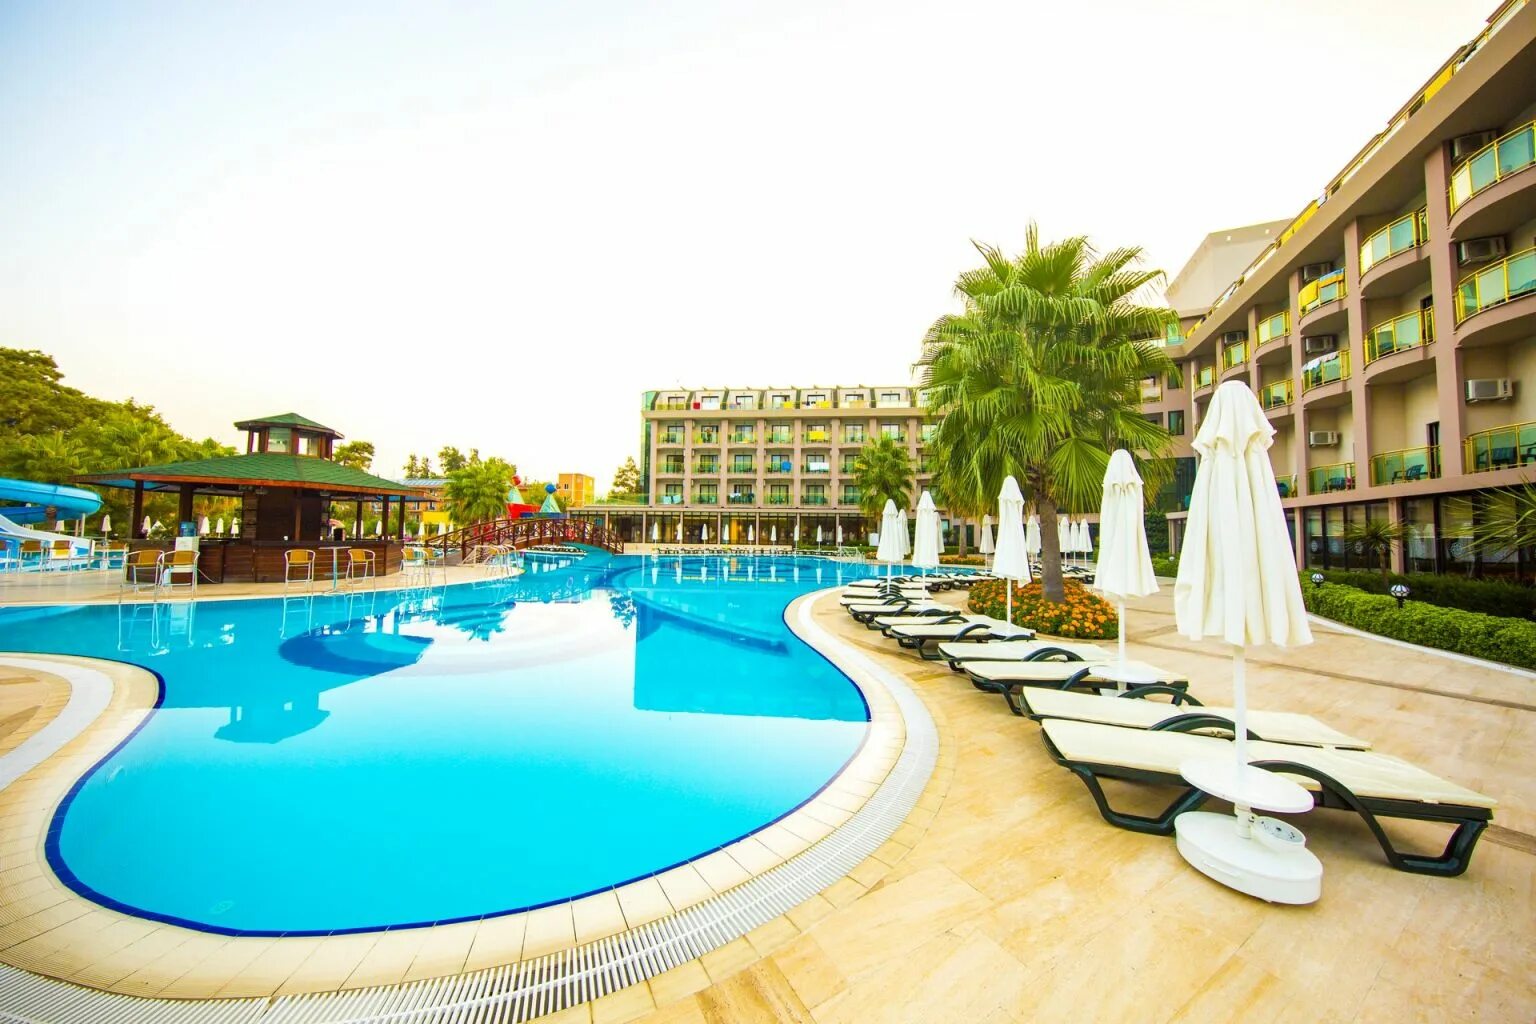 Отель Eldar Resort 4*. Отель Eldar Resort 4 Турция Кемер. Eldar garden hotel 4 турция